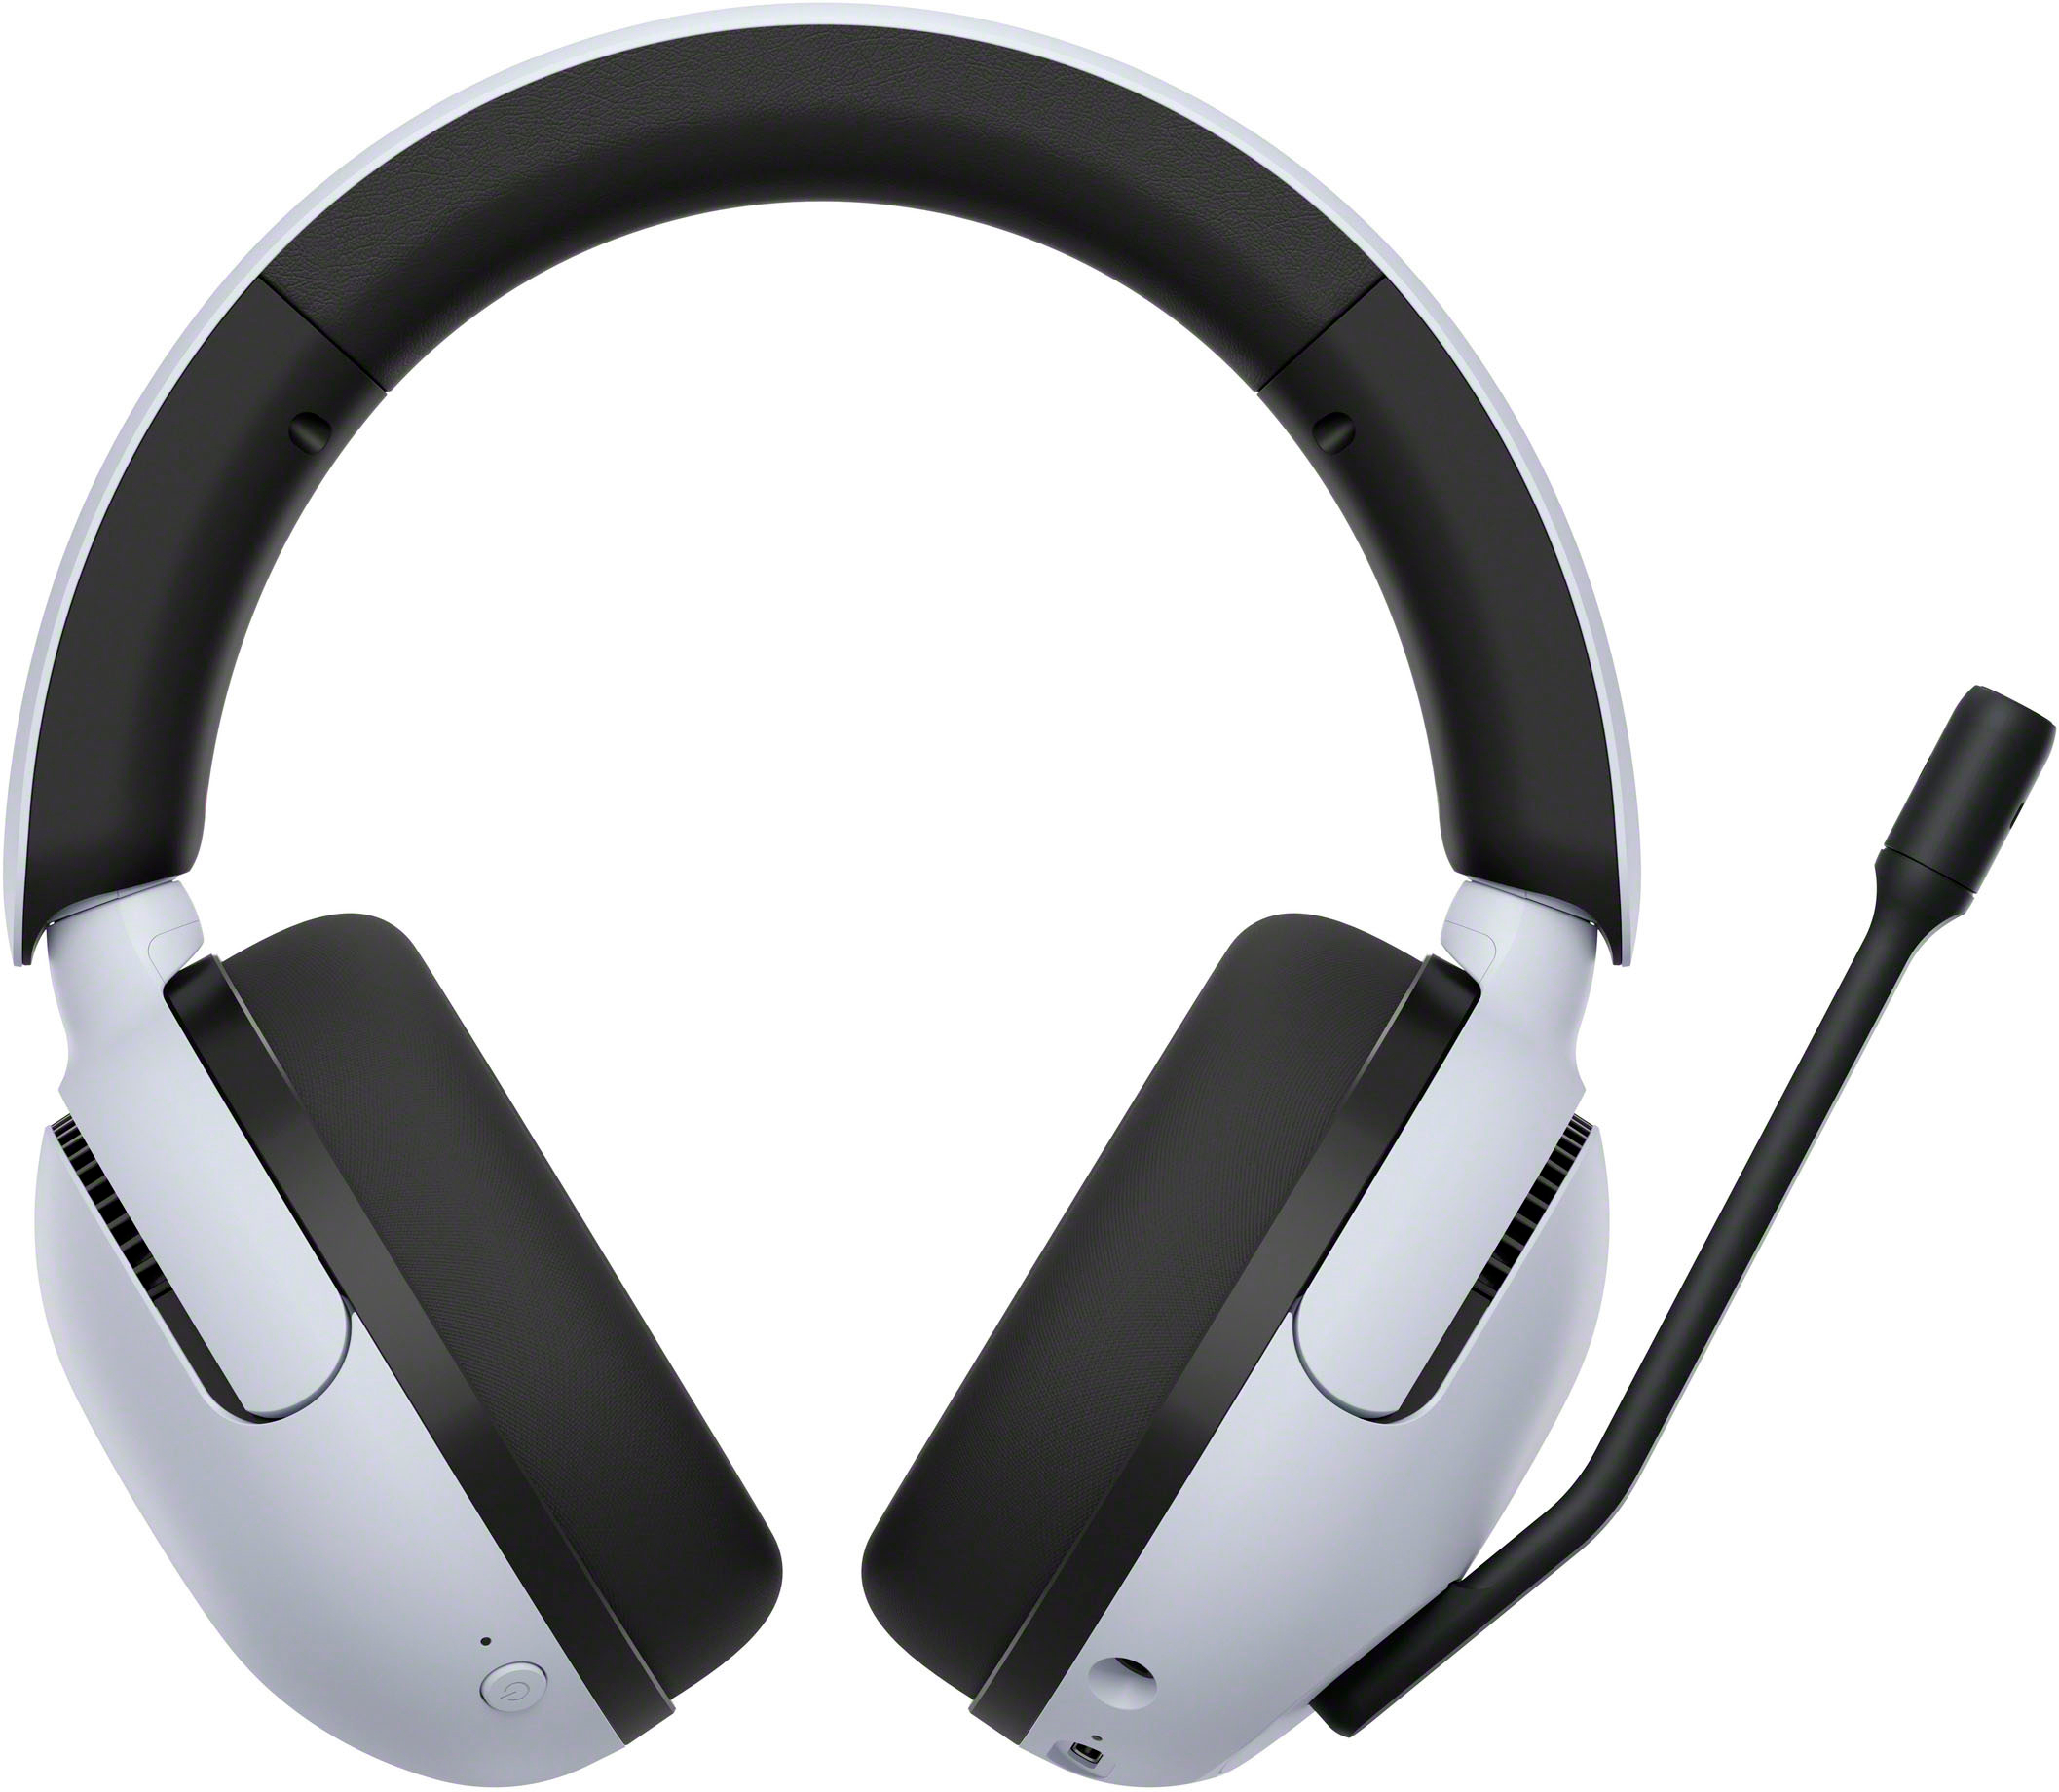 Angle View: Sony - INZONE H5 Wireless Gaming Headset - White